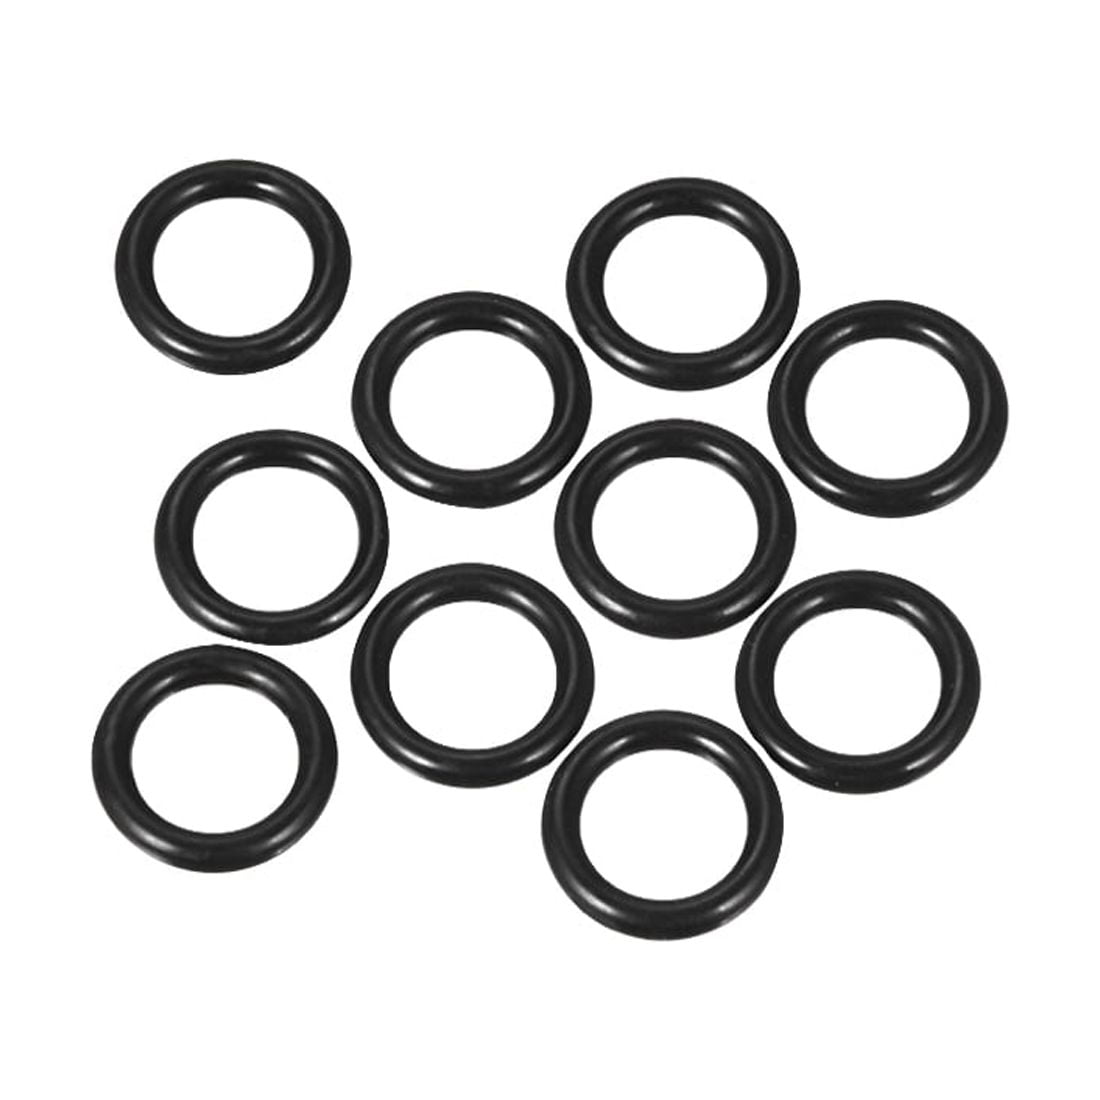 O-Rings Nitrile Rubber 35mm x 45mm x 5mm Seal Rings Sealing Gasket 10pcs -  Walmart.com